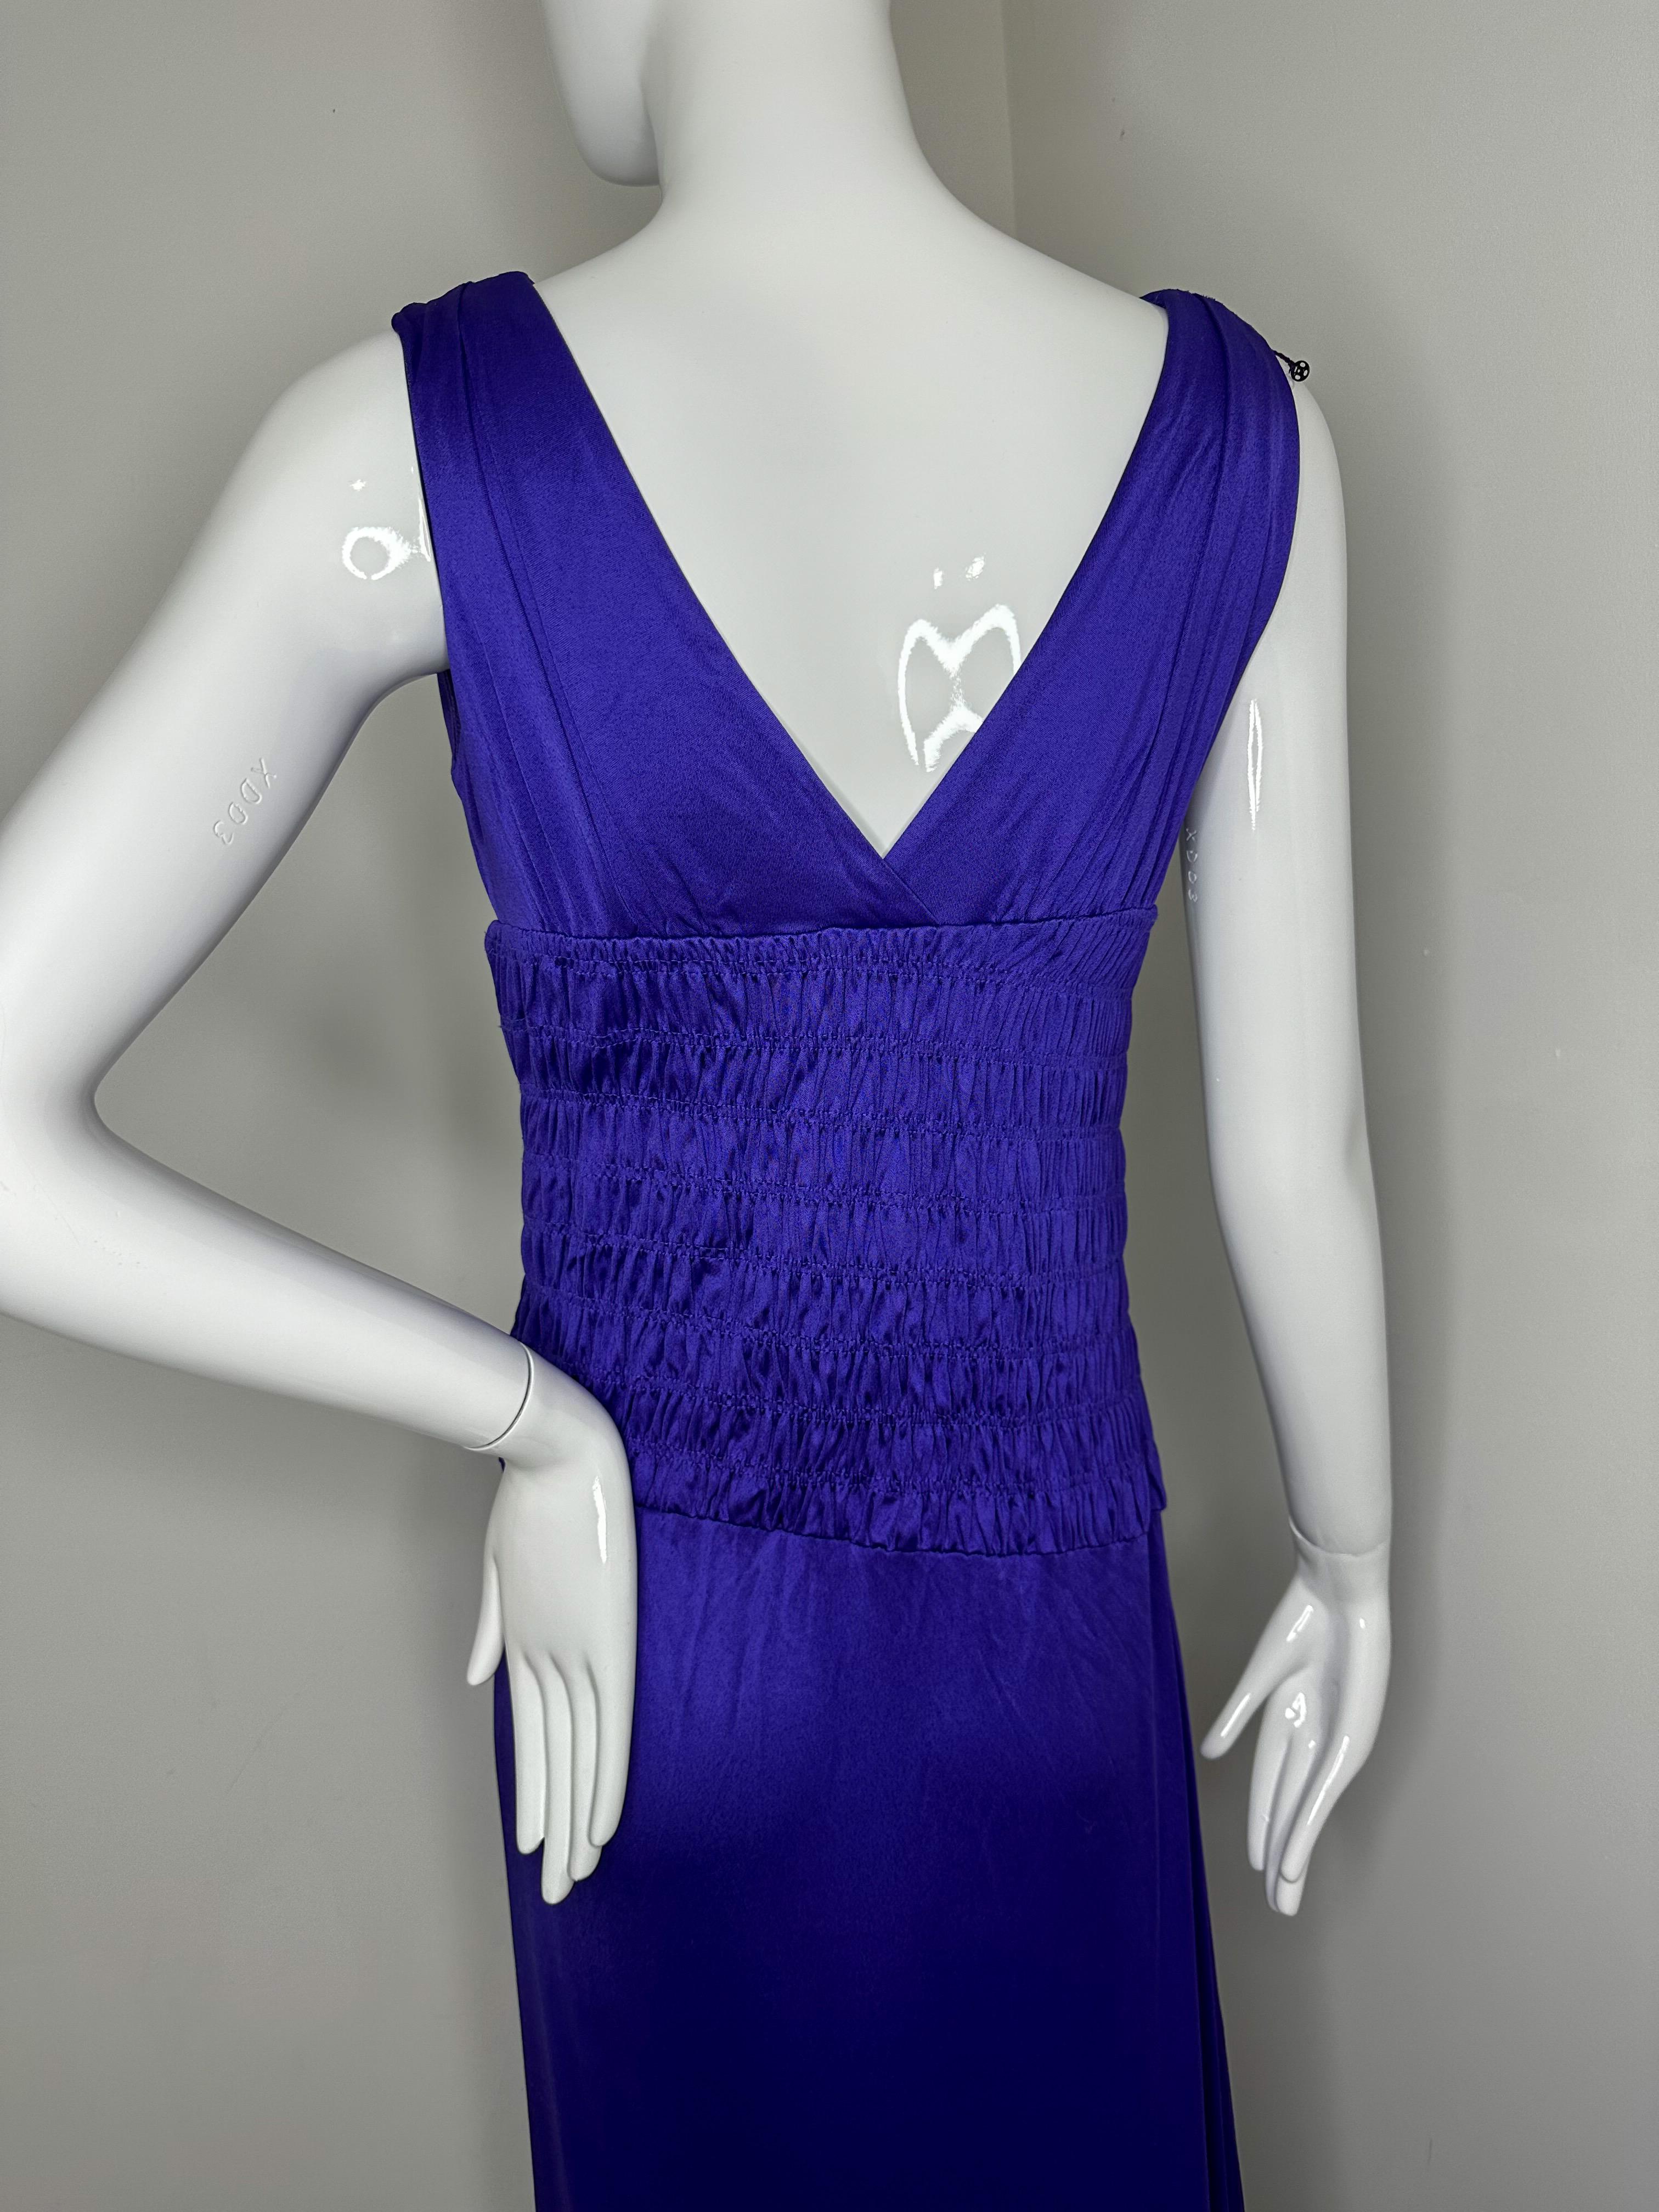 Christian Dior by John Galliano 2009 purple maxi dress 2